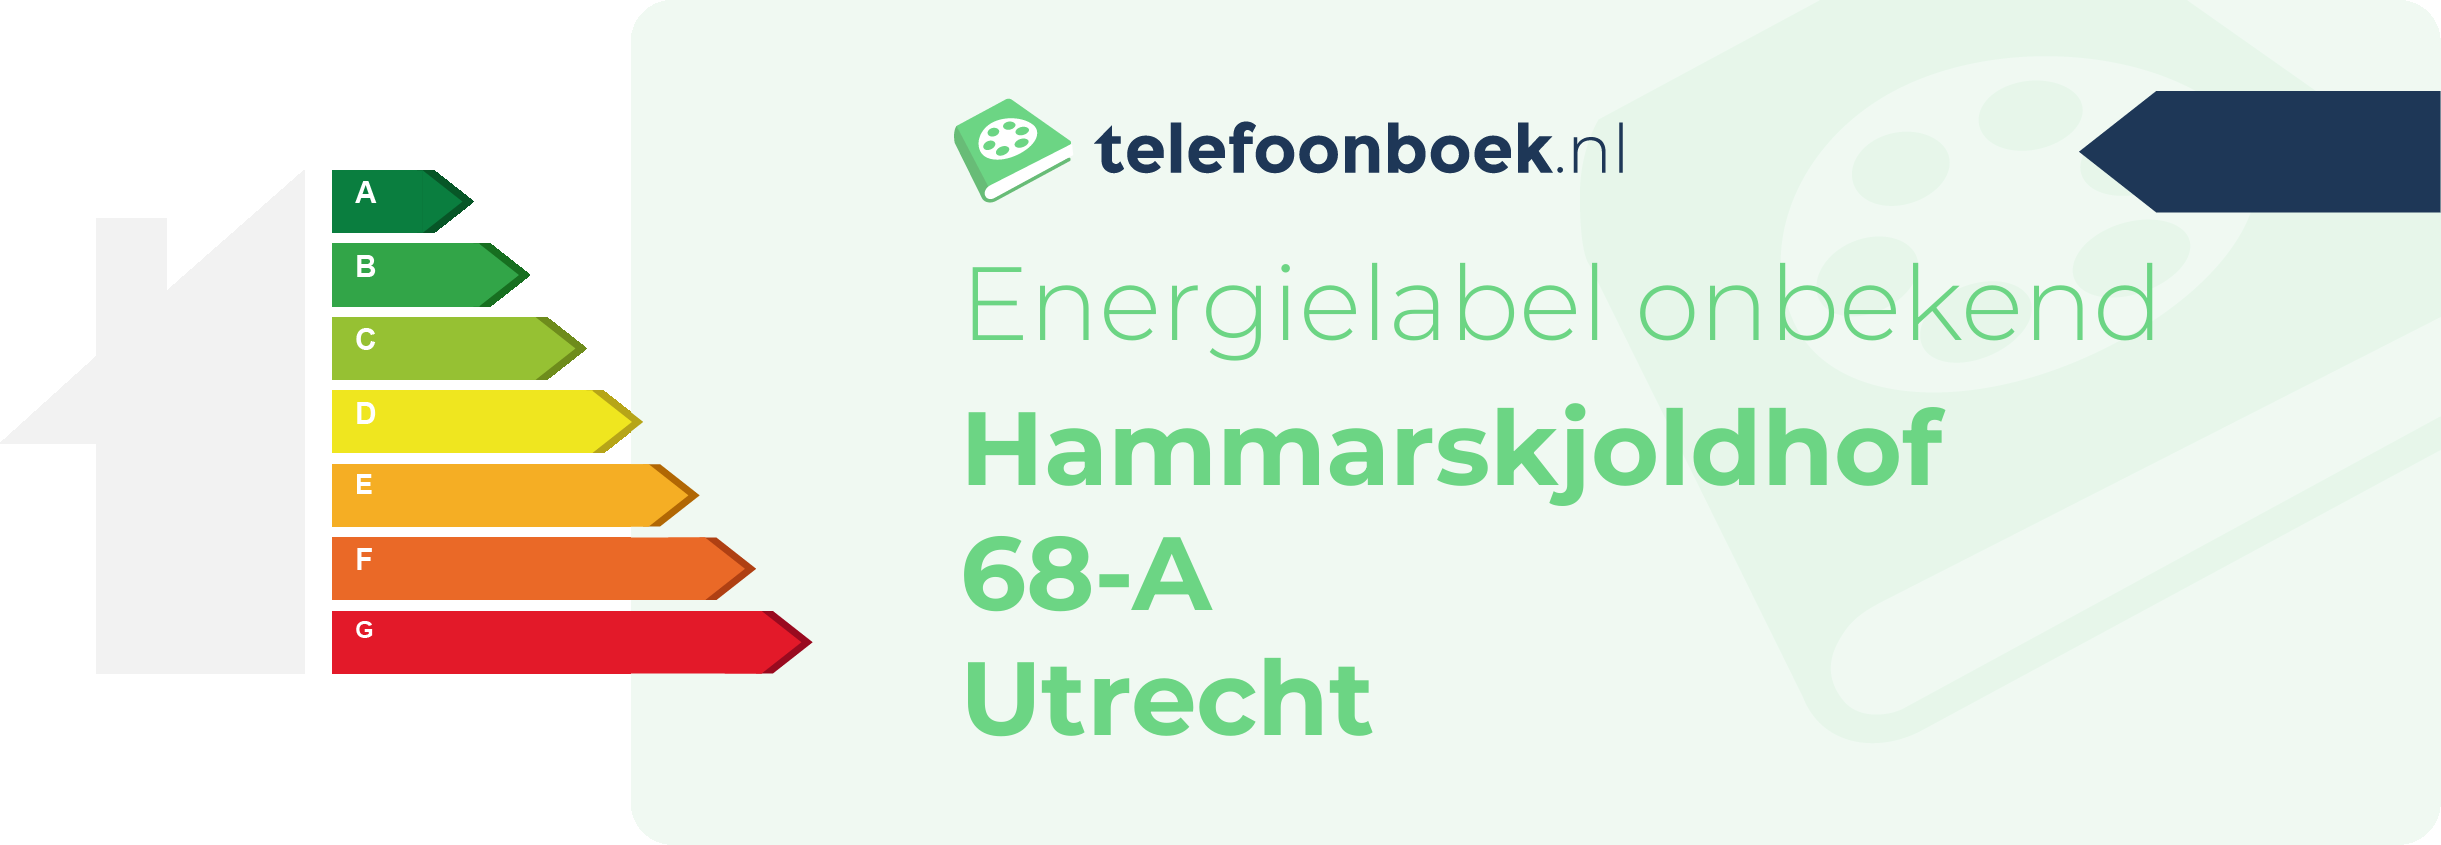 Energielabel Hammarskjoldhof 68-A Utrecht